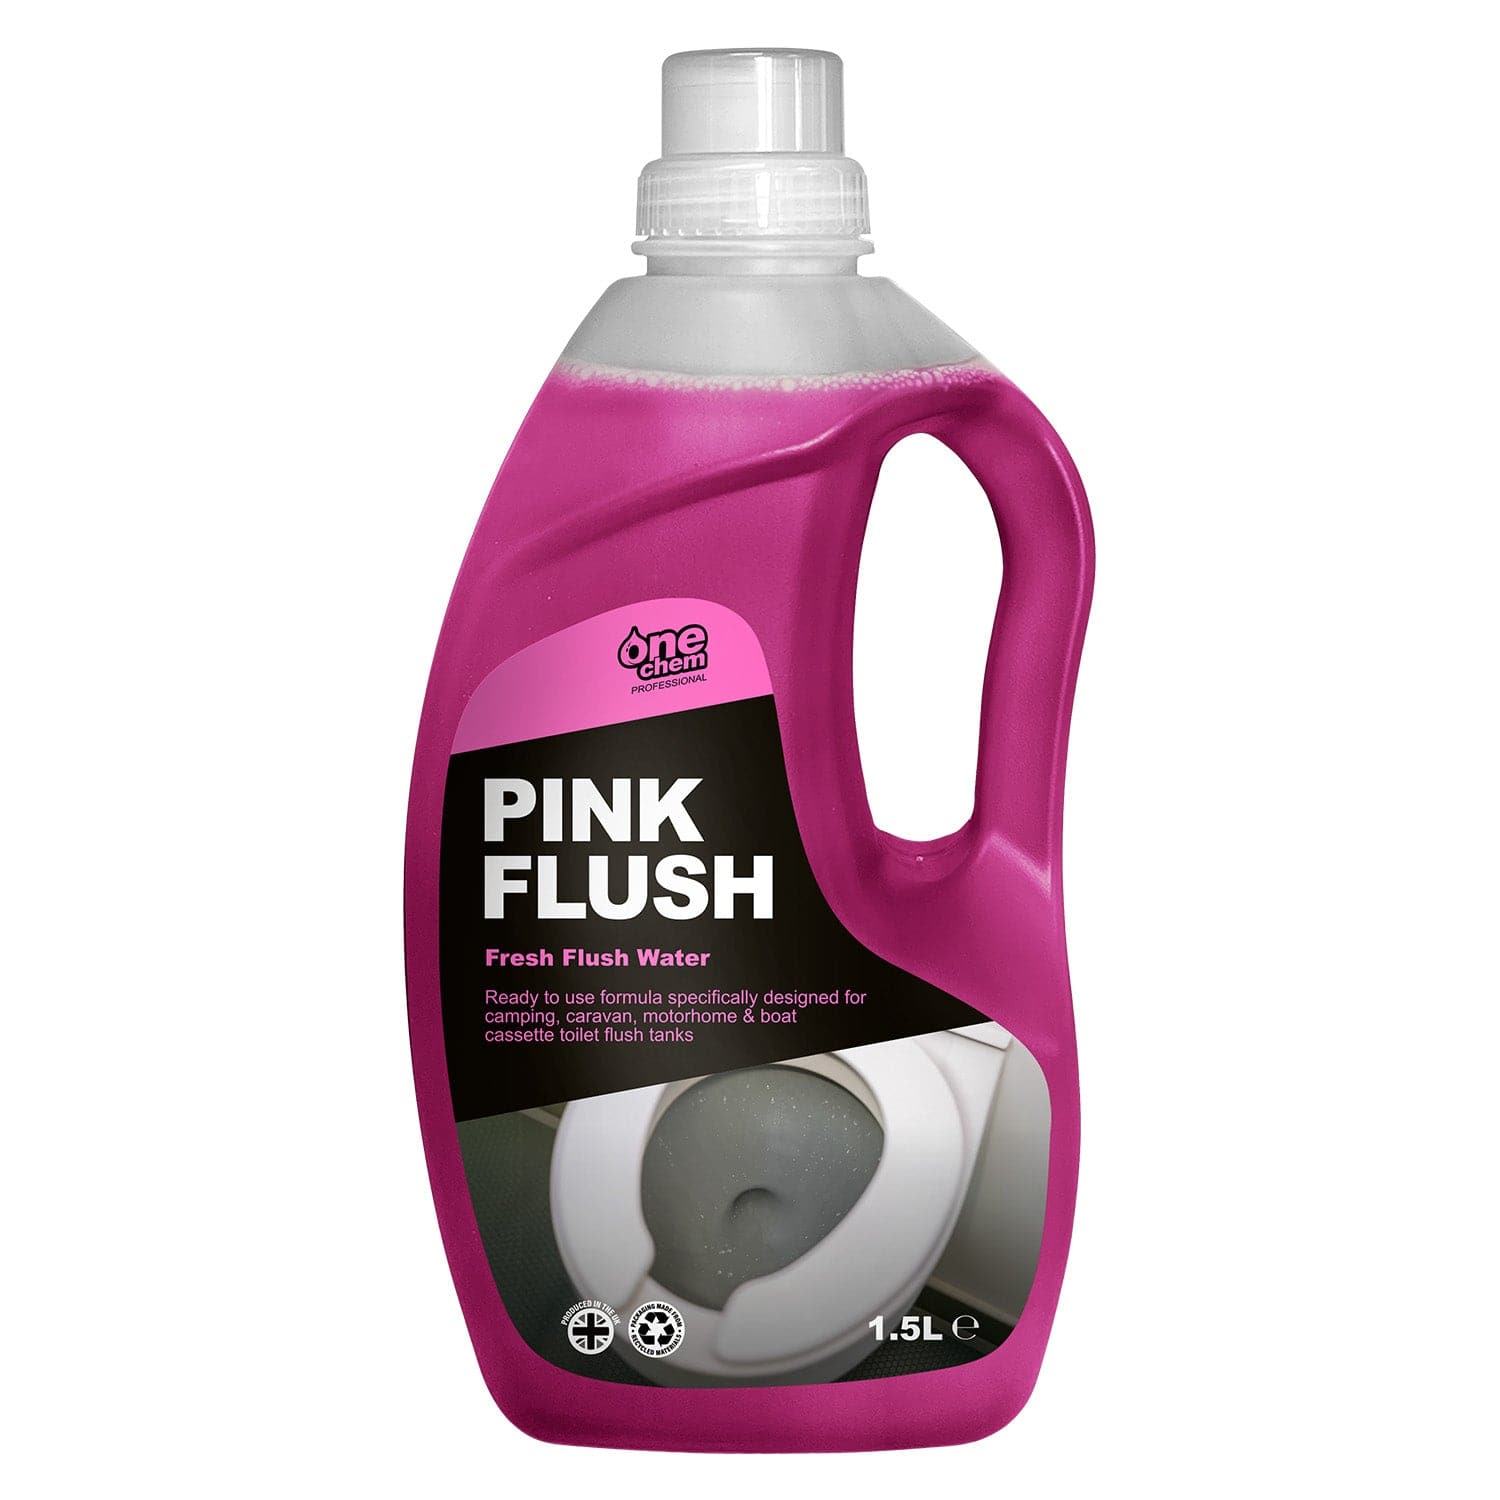 One Chem Professional Toilet Cleaner Pink Flush Fluid, 1.5 Litre